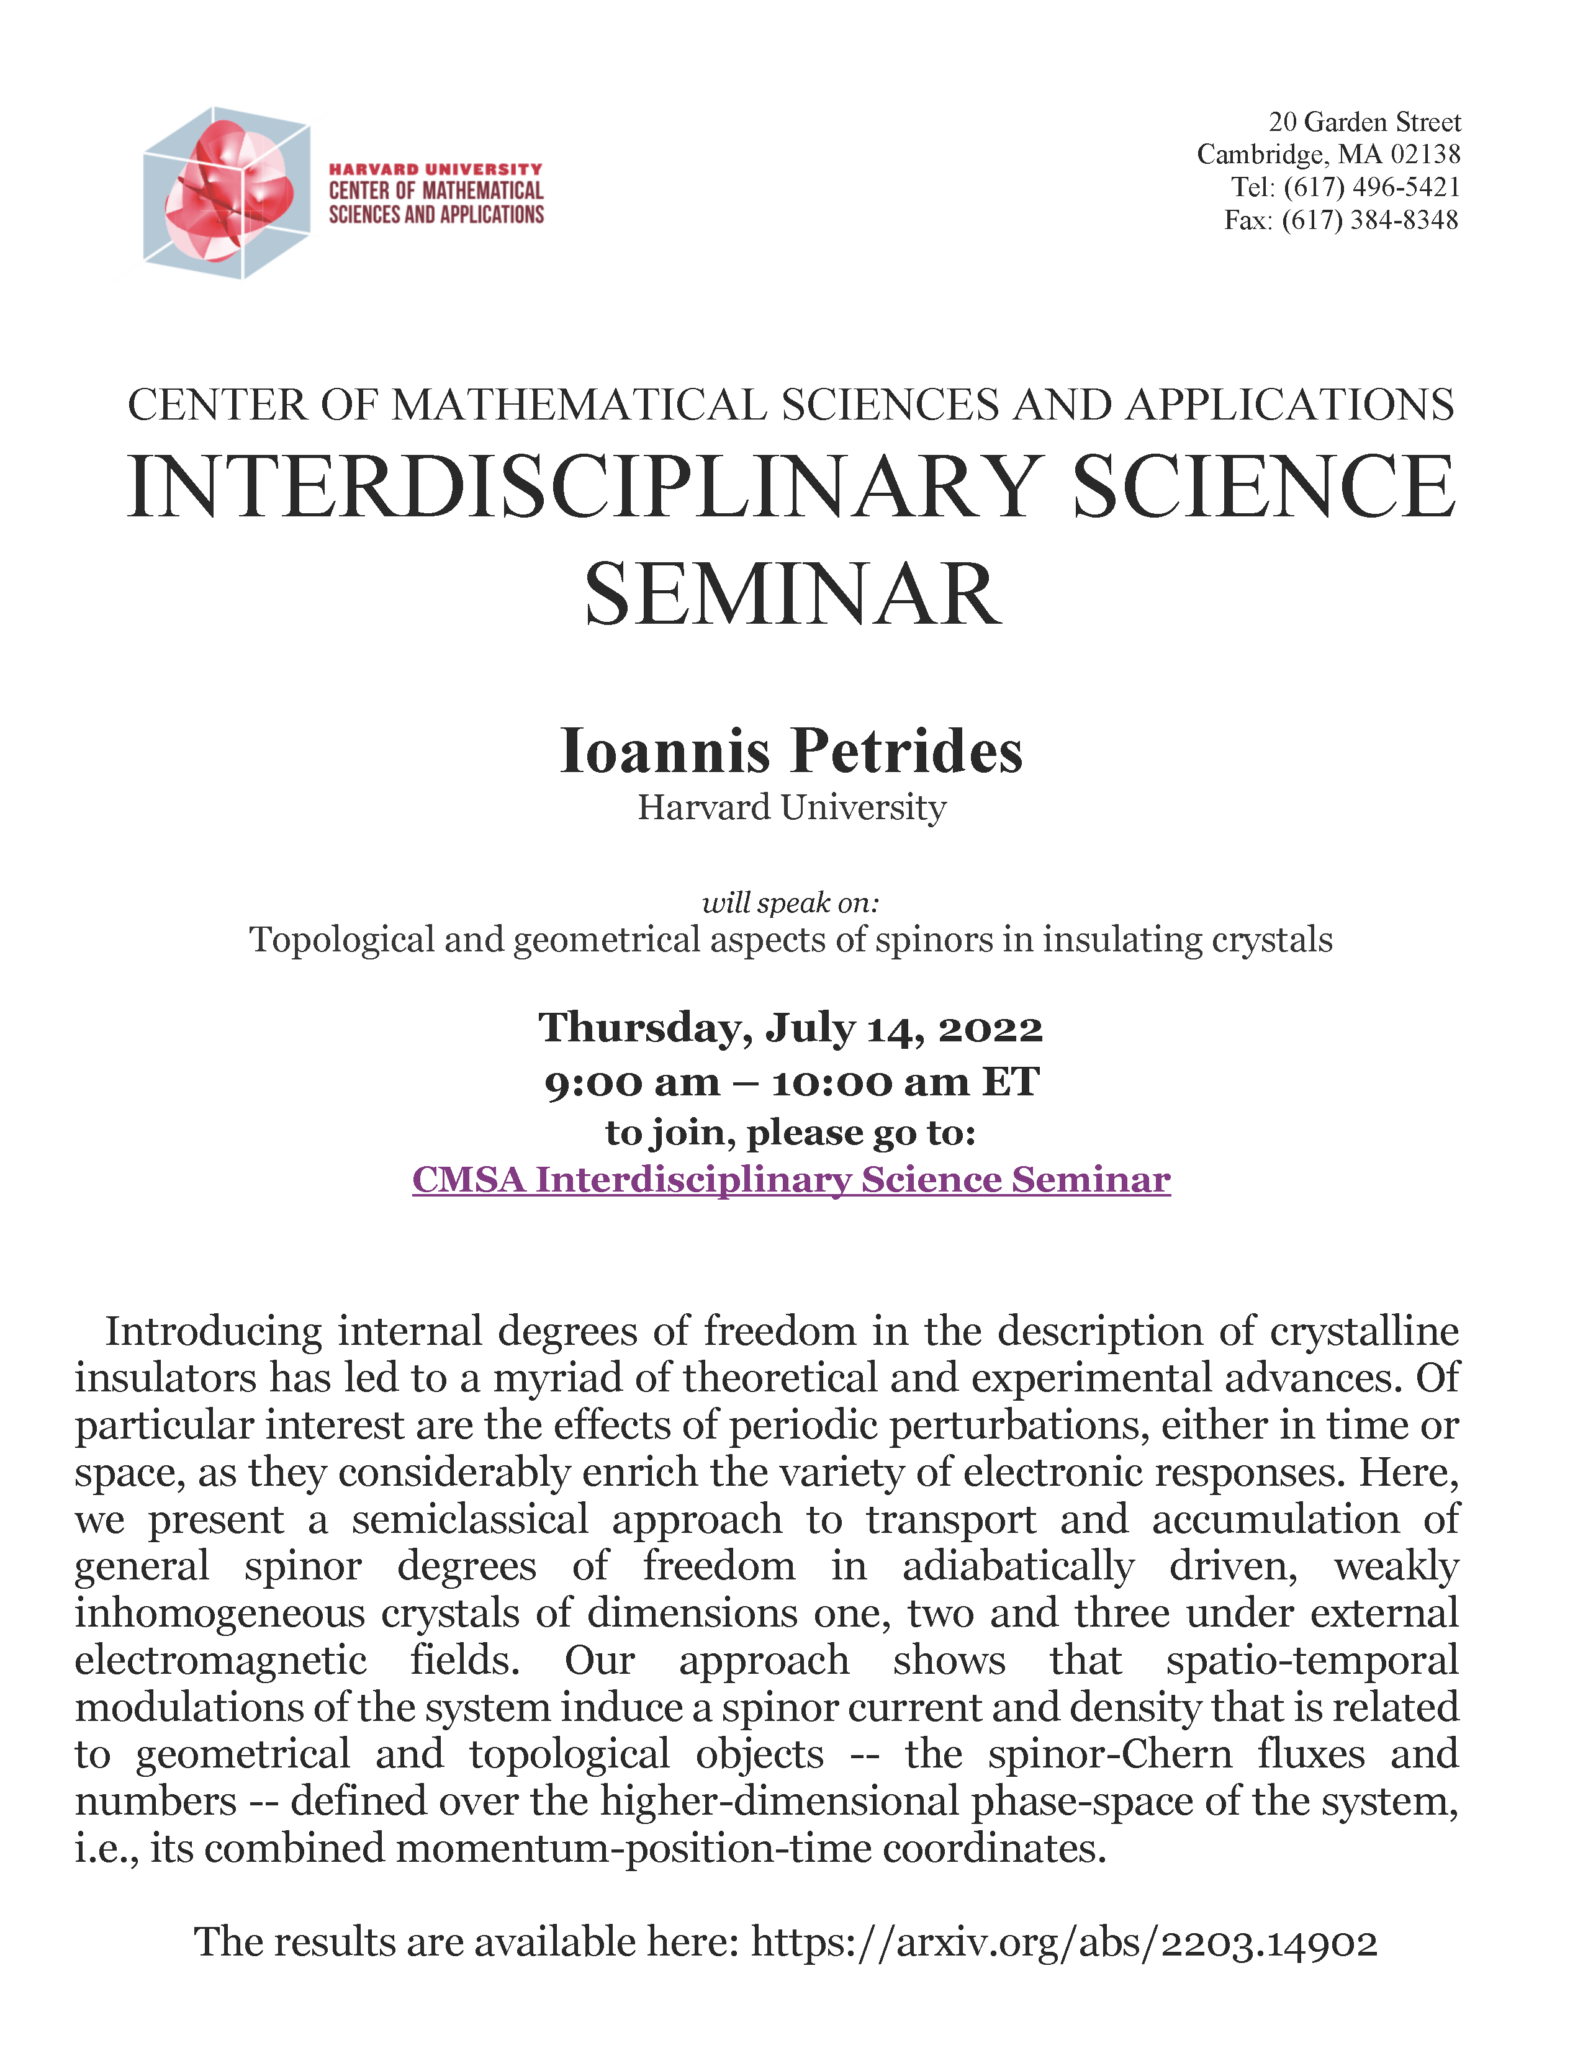 CMSA-Interdisciplinary-Science-Seminar-07.14.22-1583x2048